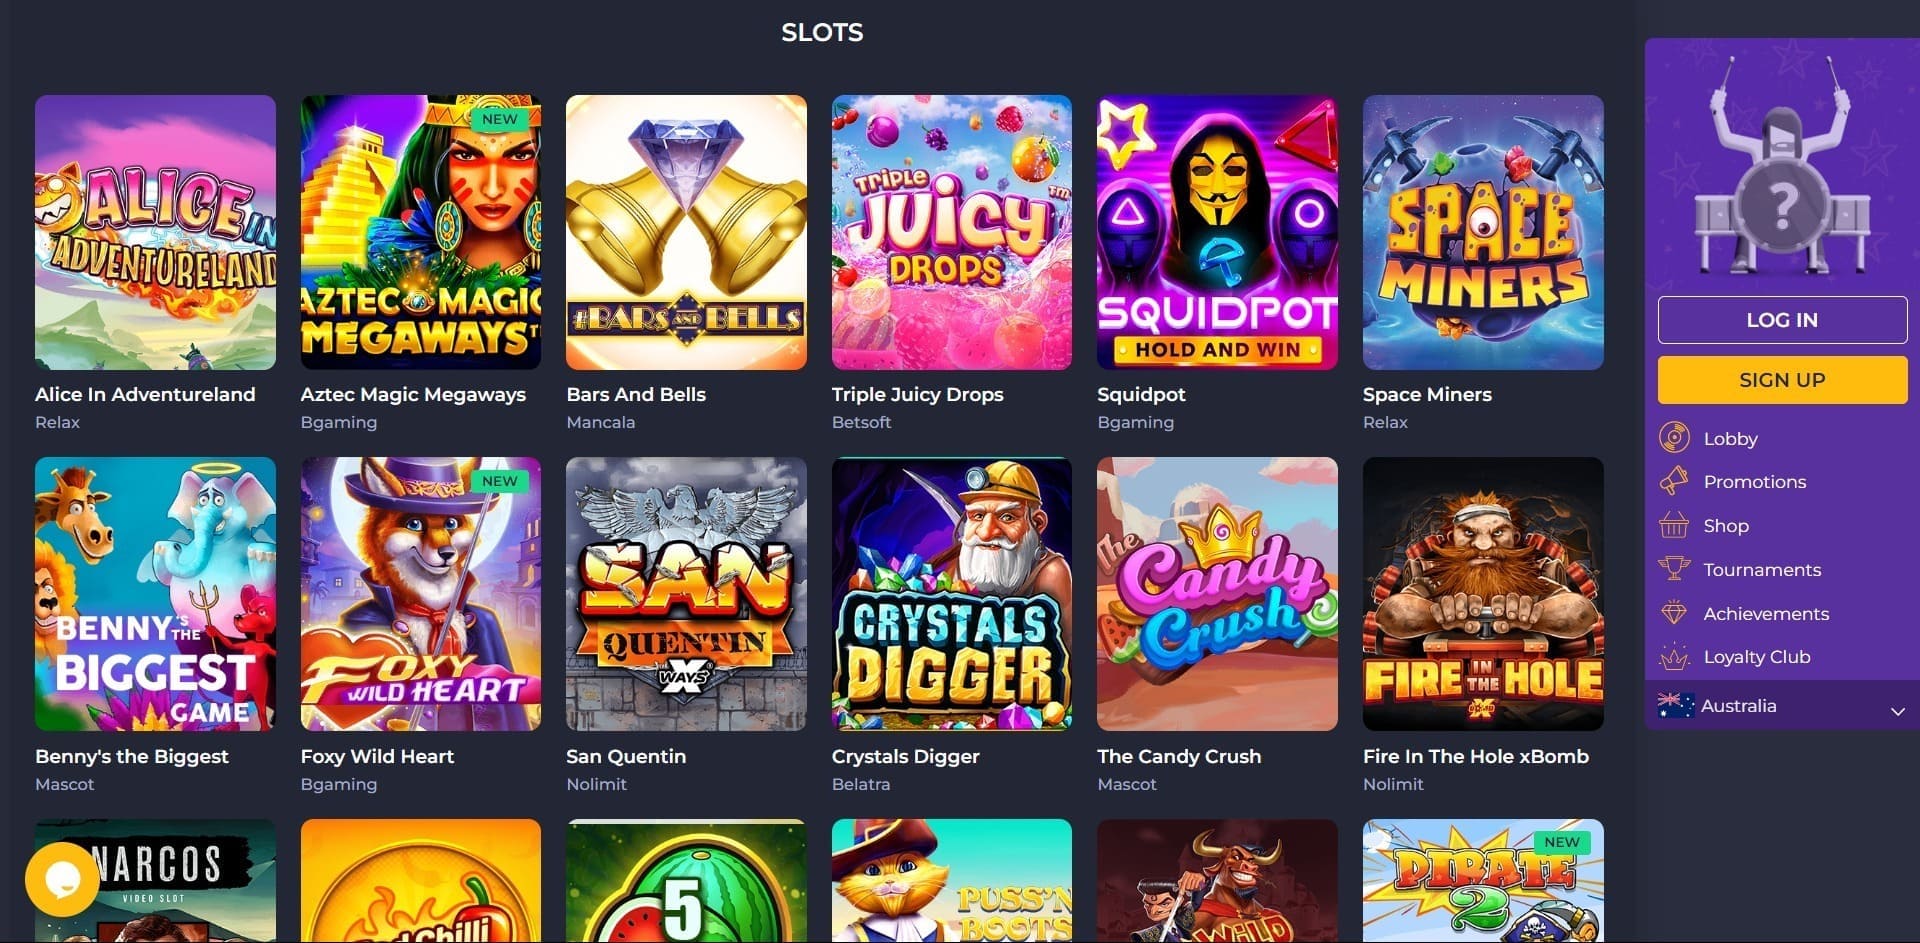 Rolling Slots Casino automaty do gier